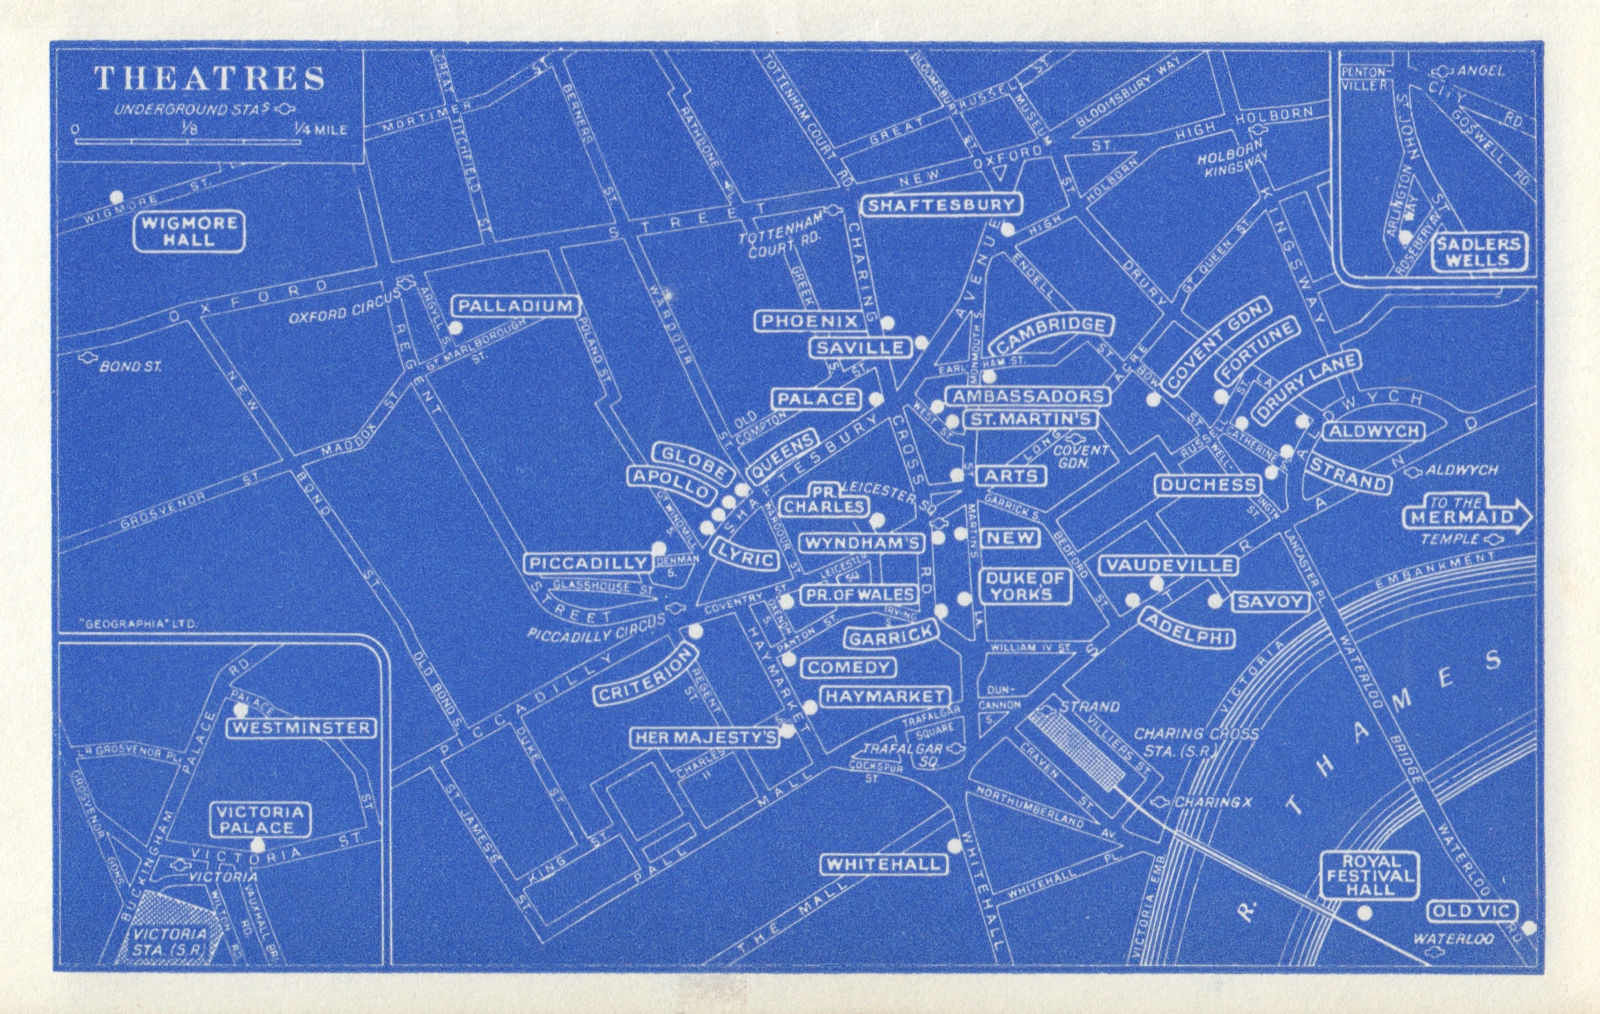 LONDON WEST END THEATRES Covent Garden St James's Shaftesbury Avenue 1965 map